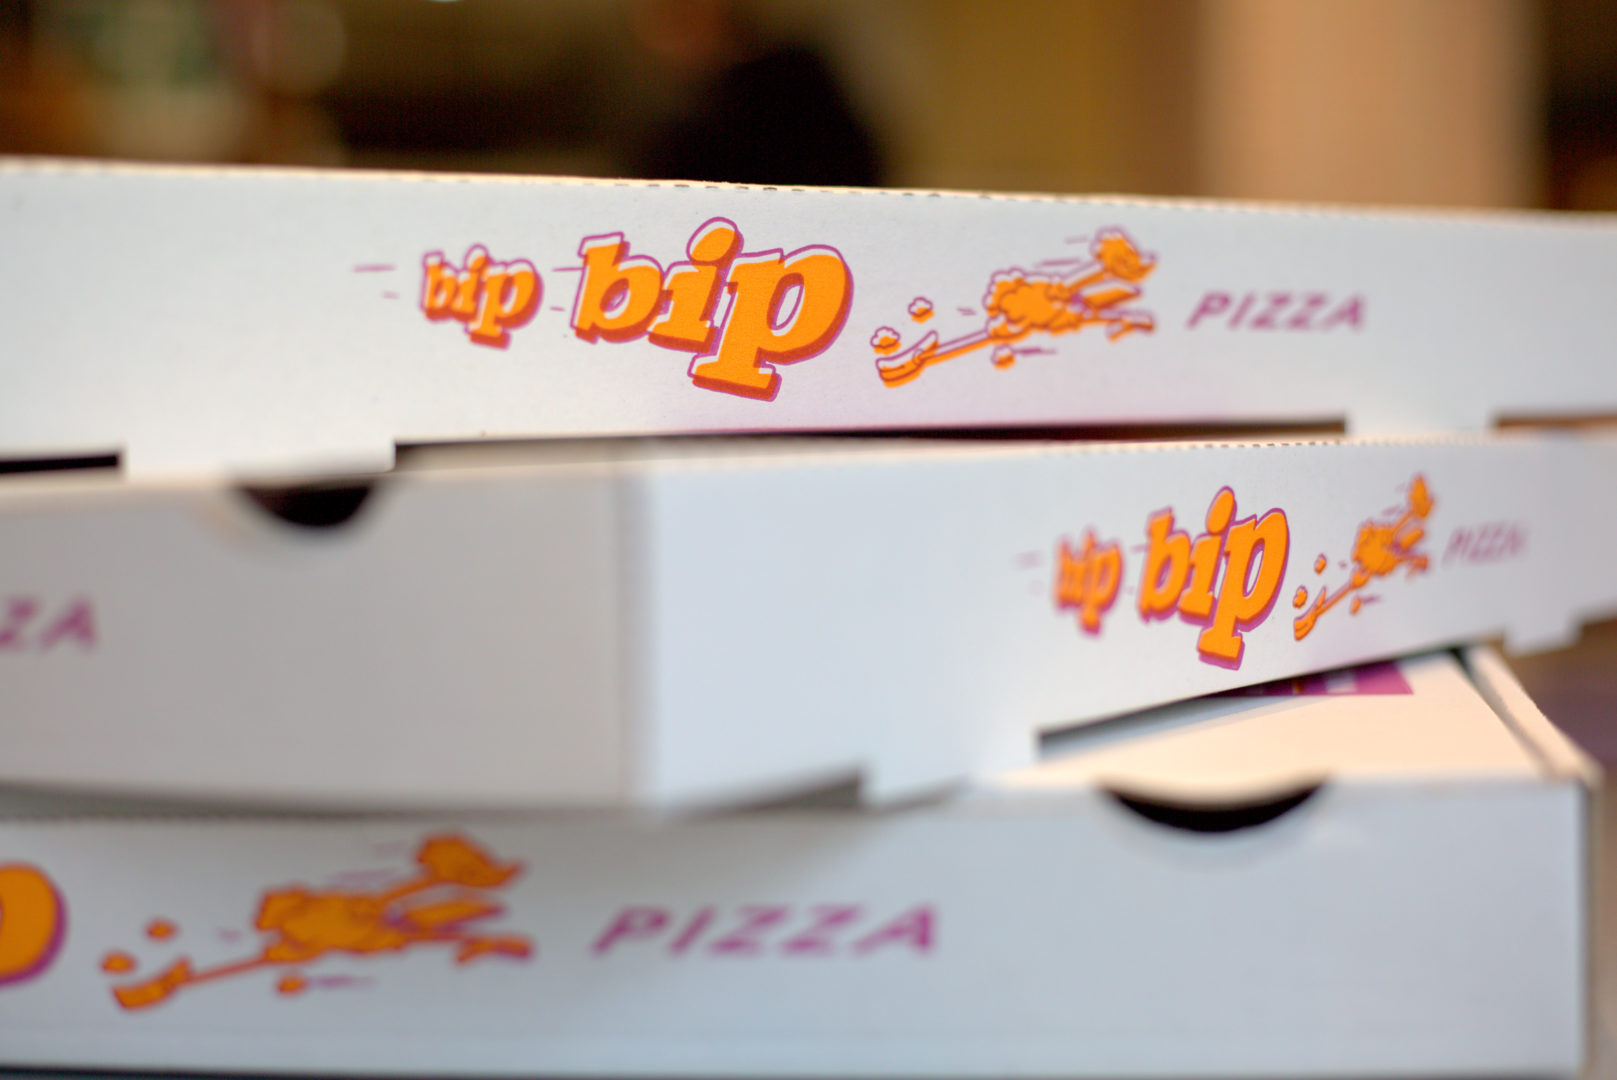 pizza-a-emporter-bipbip-pizza-1